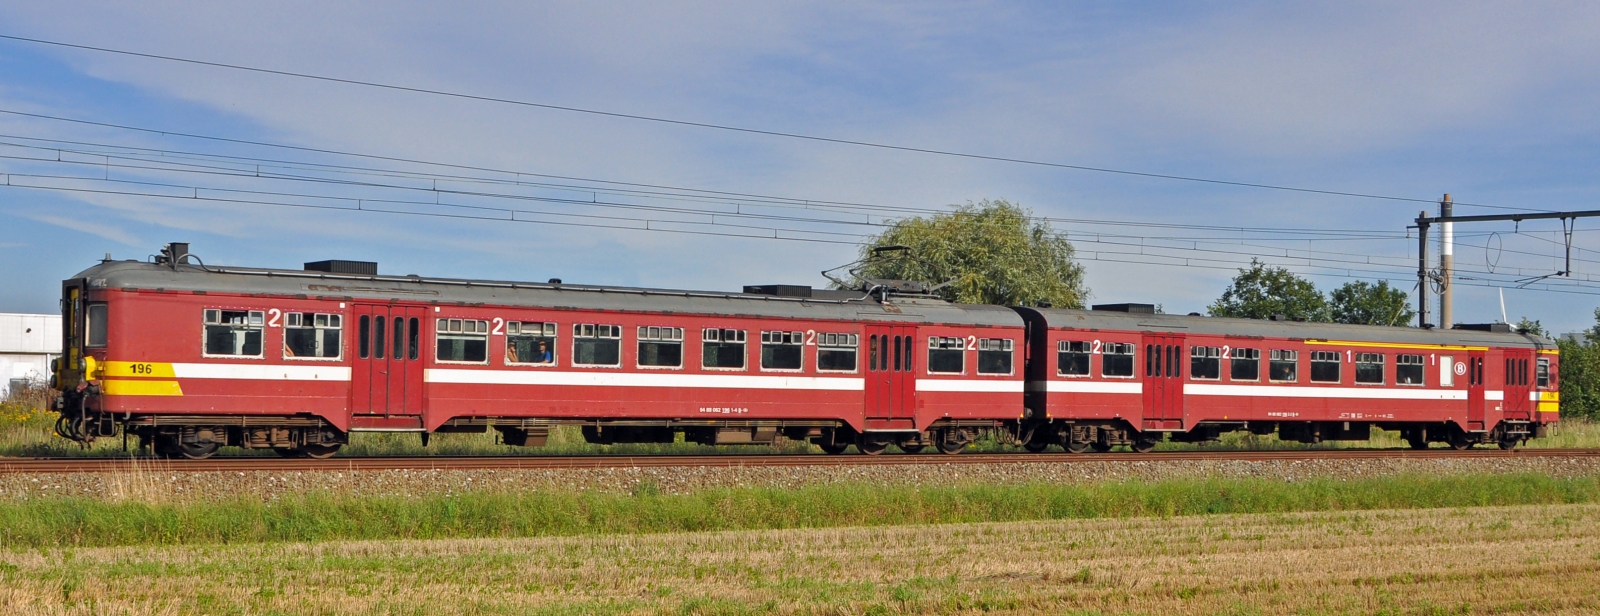 AM 62 No. 196 in August 2011